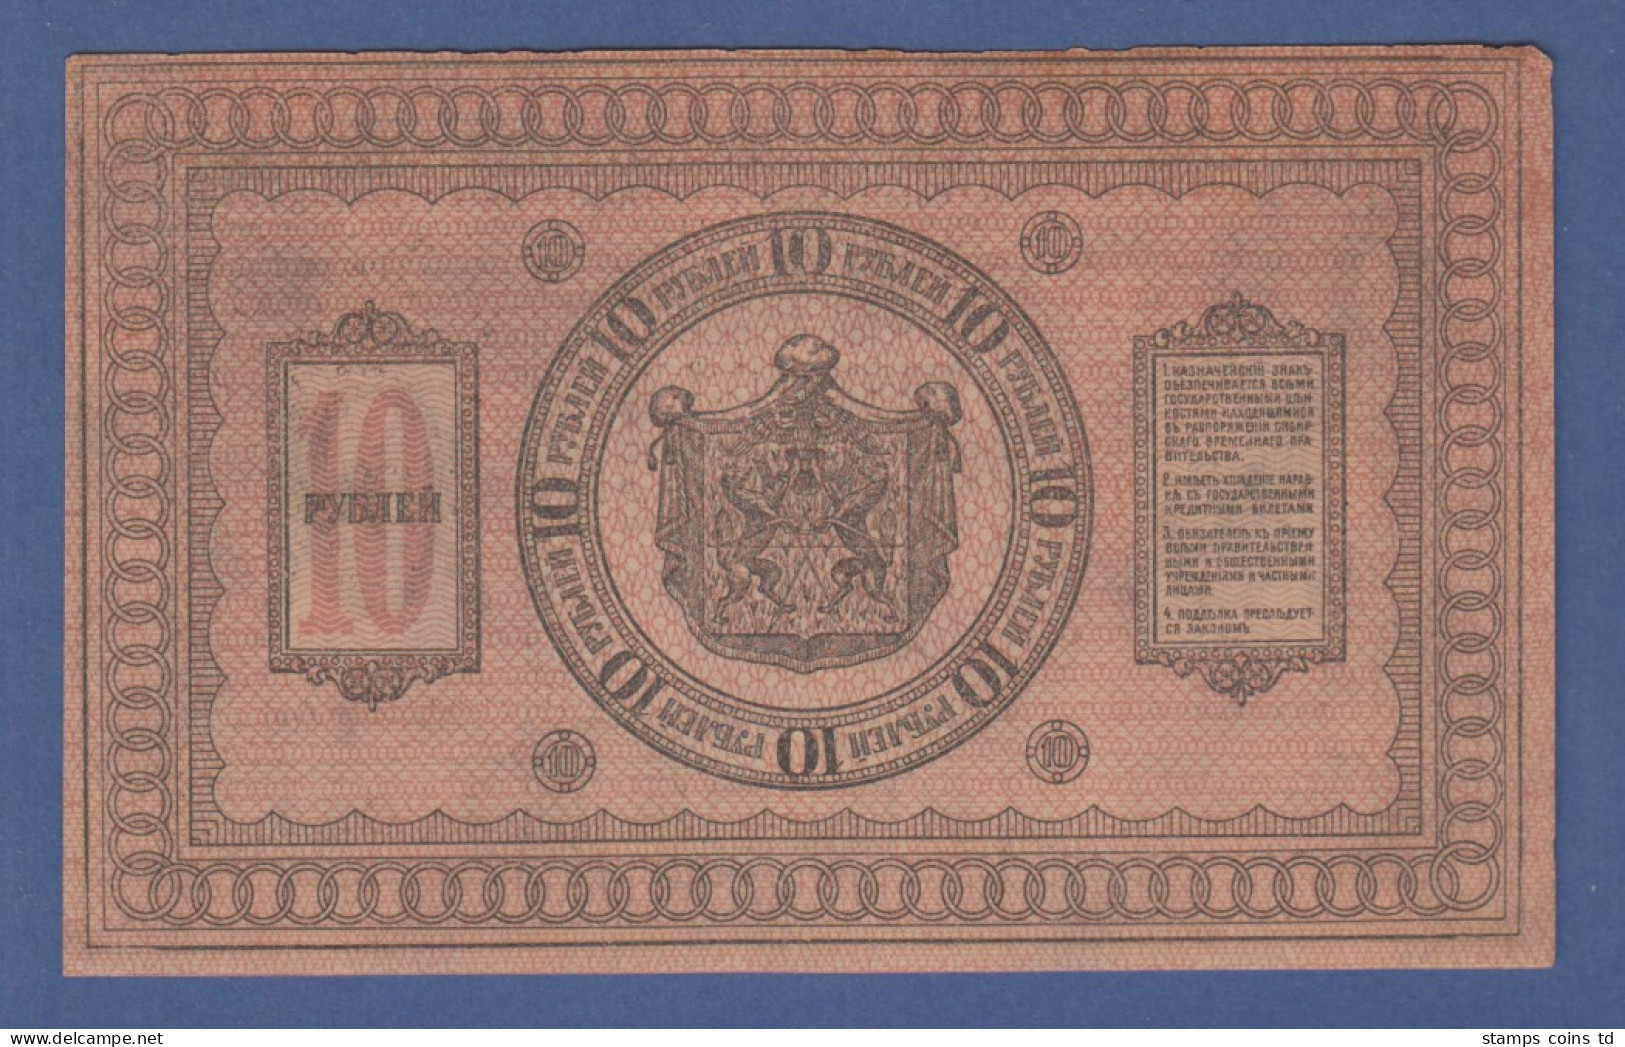 Banknote Russland Sibirien 10 Rubel 1918 - Russia